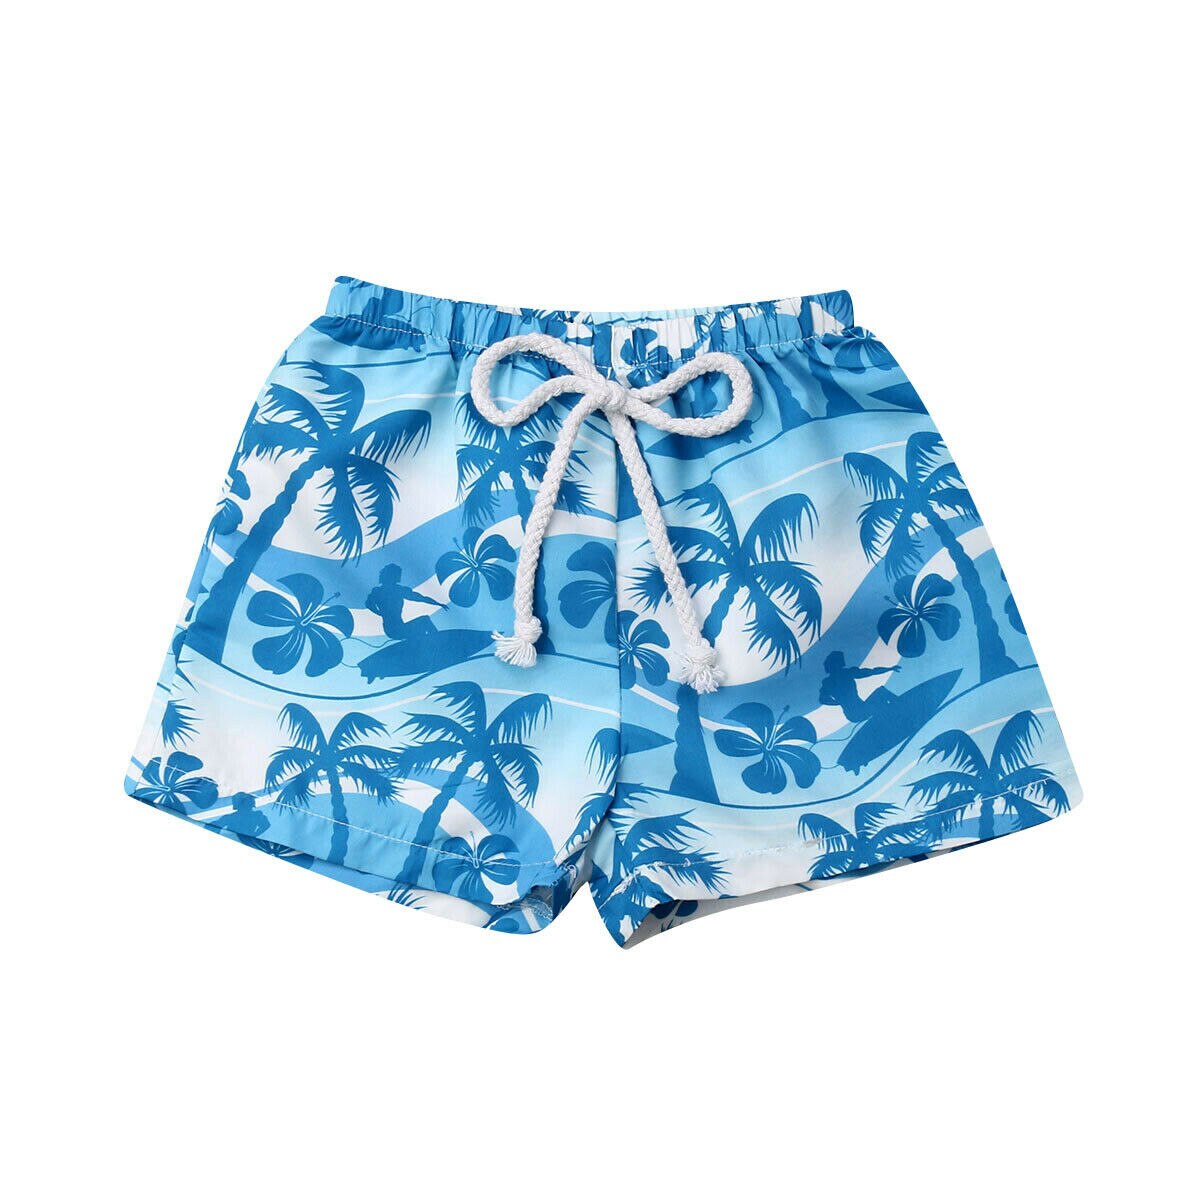 Hawaiiansk svømning strand shorts barn baby drenge elastisk talje kort bagagerum sommer dreng badetøj strandtøj strand shorts: Blå / 120